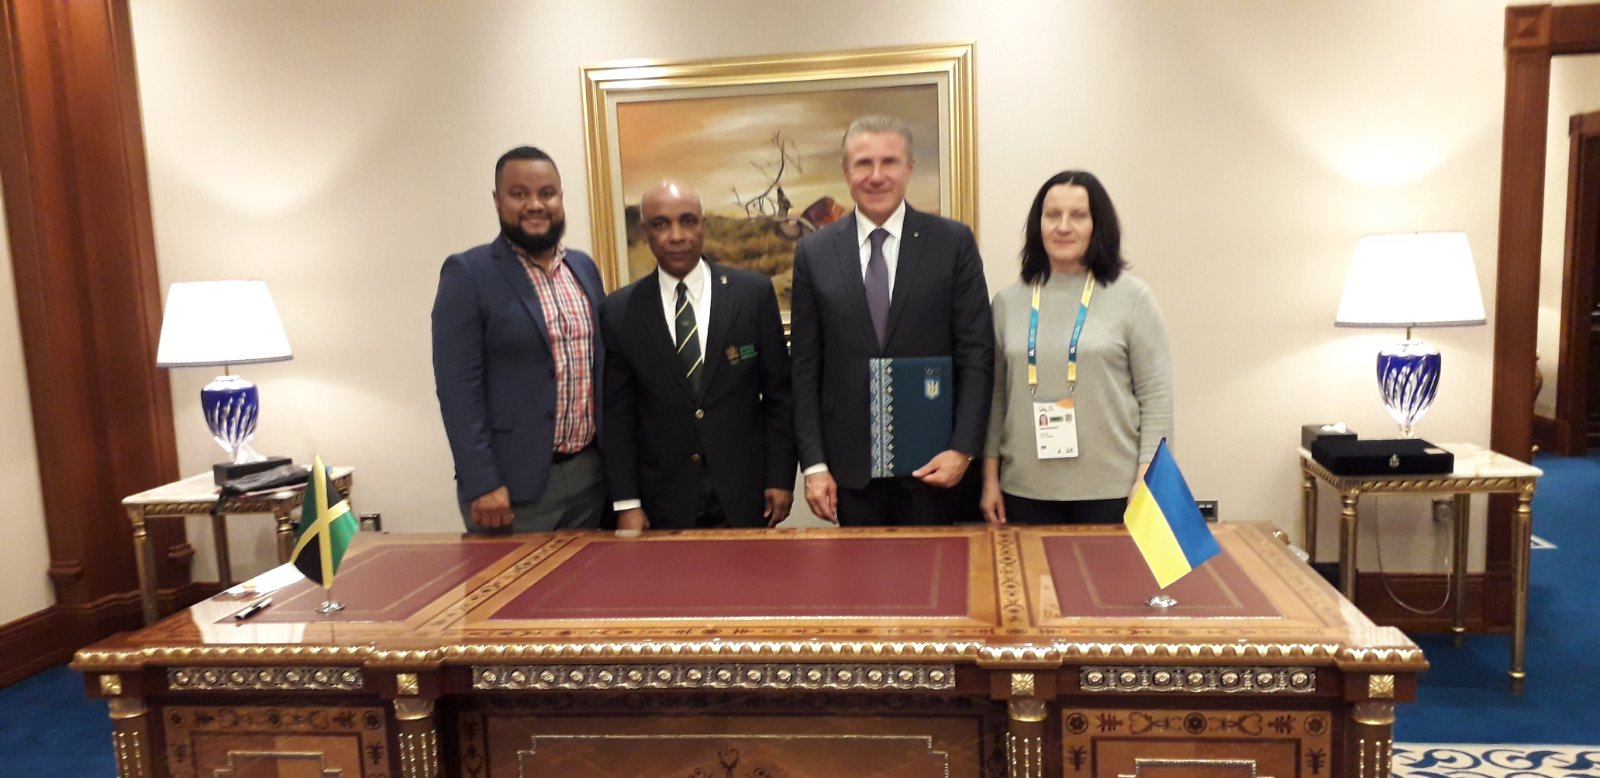 Ukraine and Jamaica NOCs sign partnership agreement